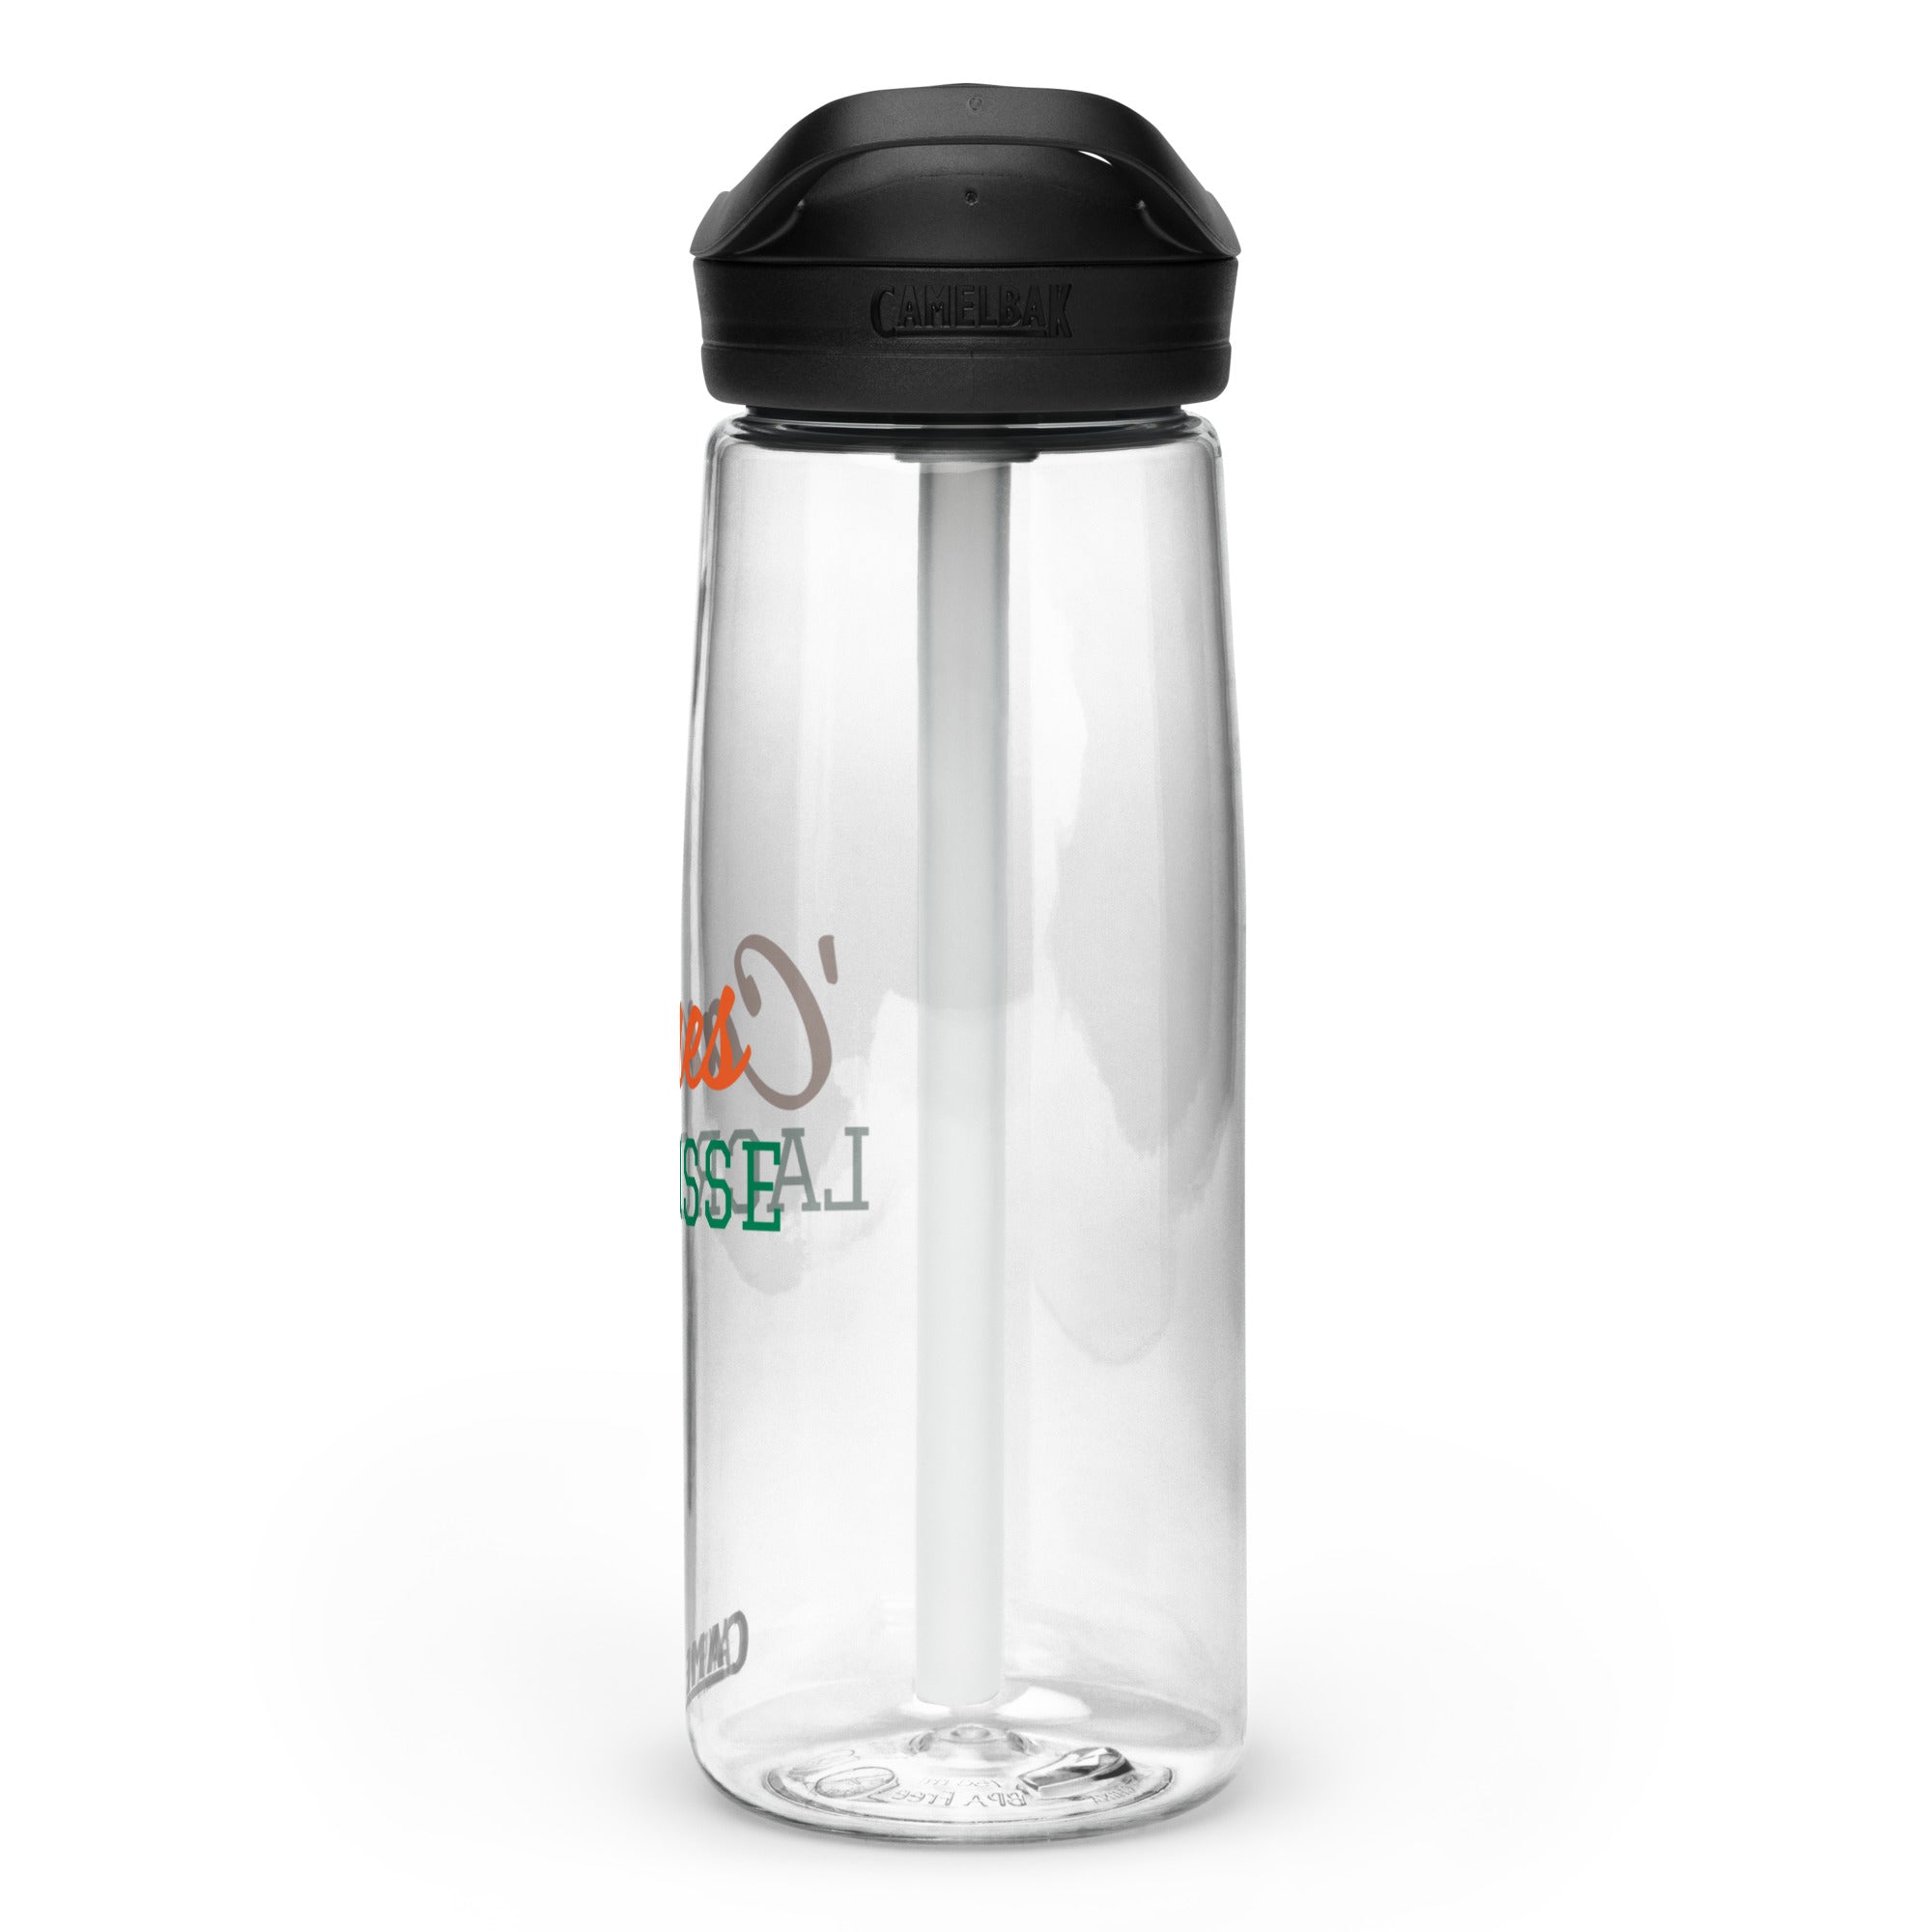 Miami Sports water bottle